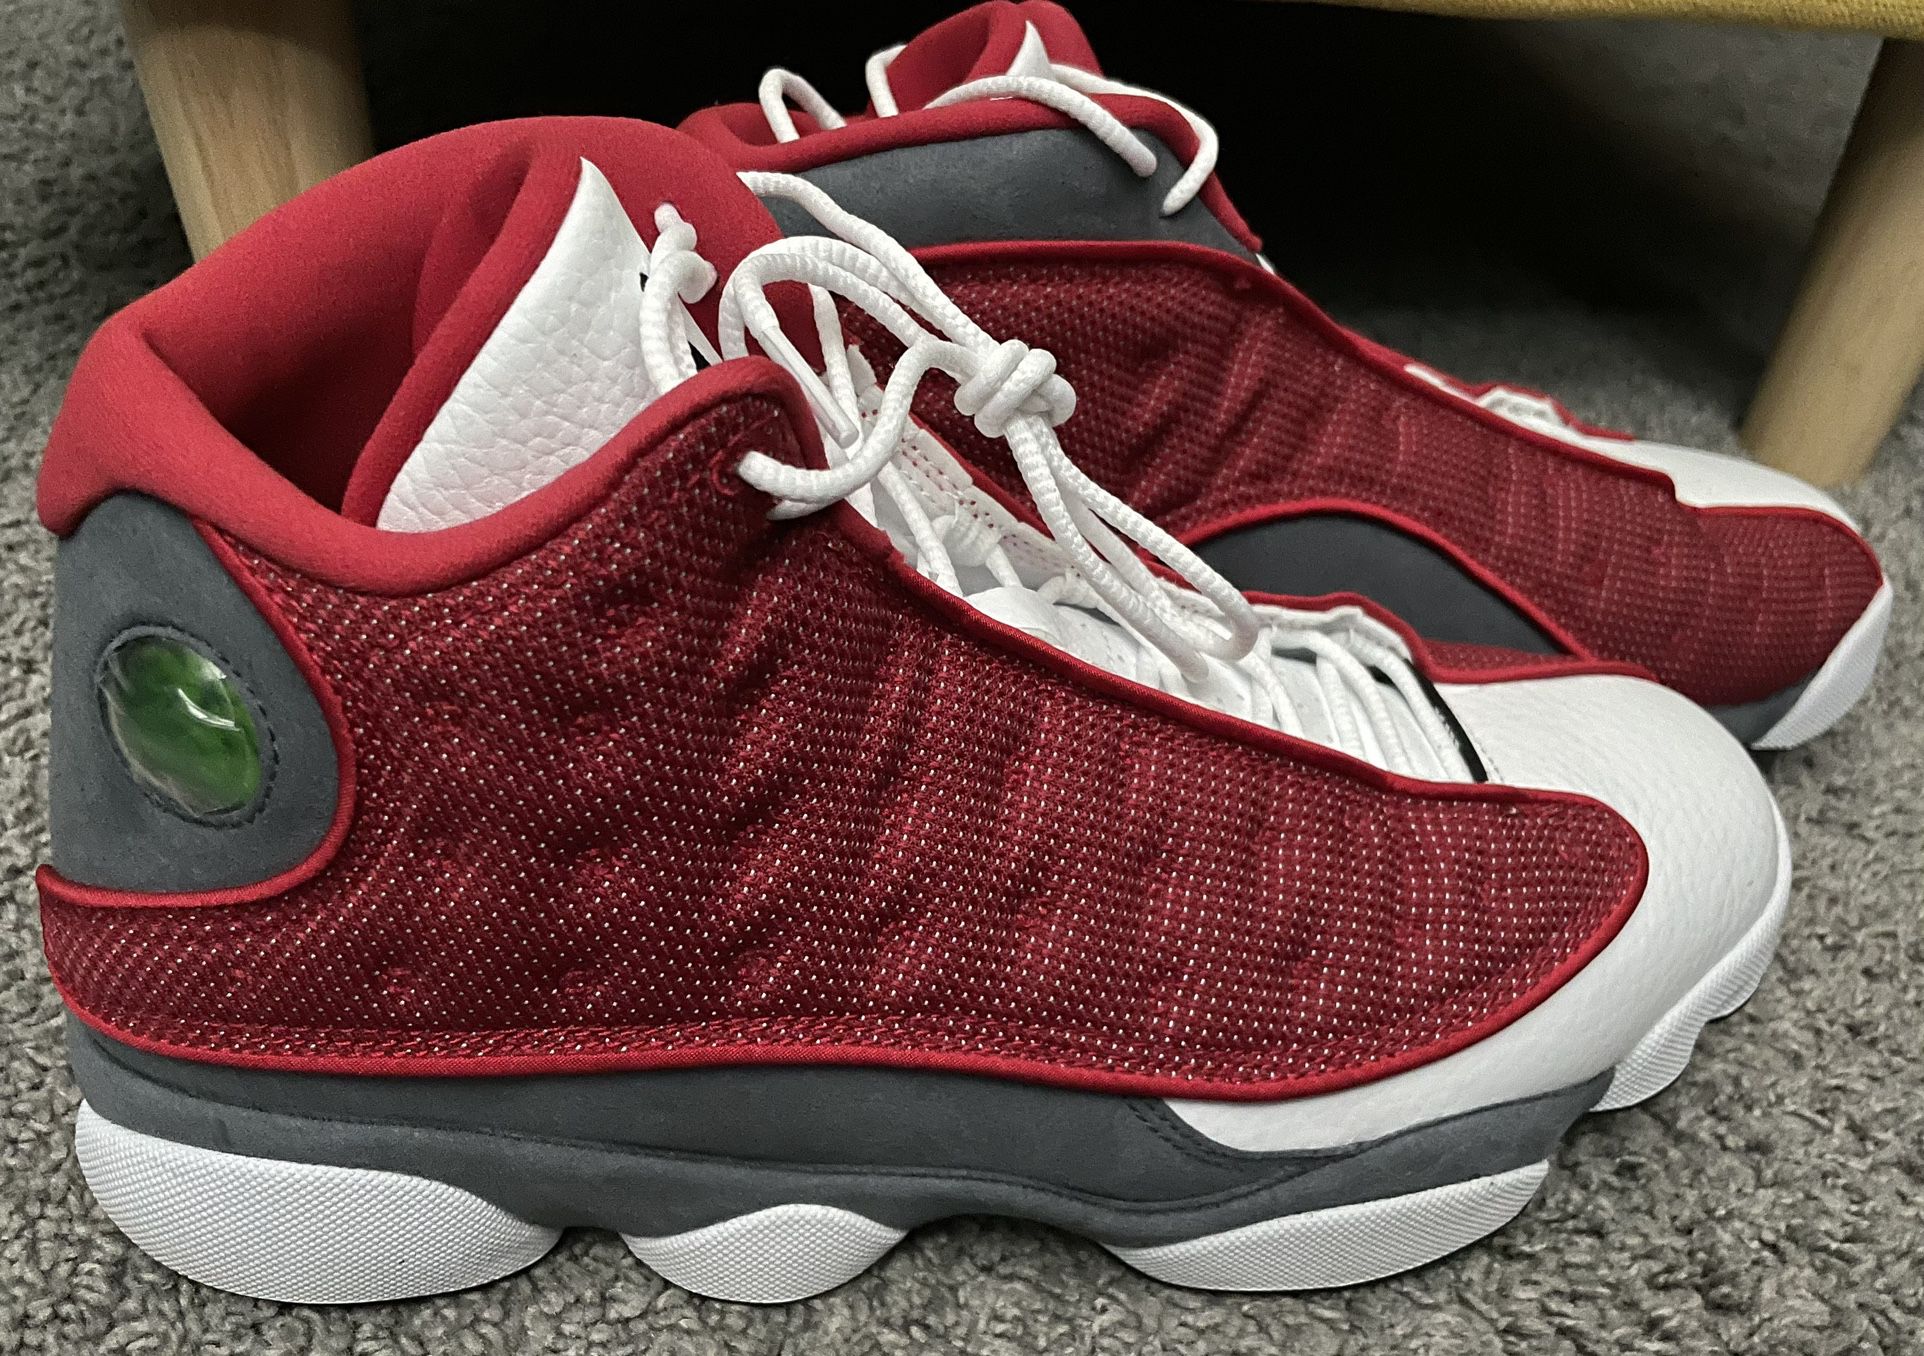 Men’s Air Jordan 13 Retro (red/white) Size 10